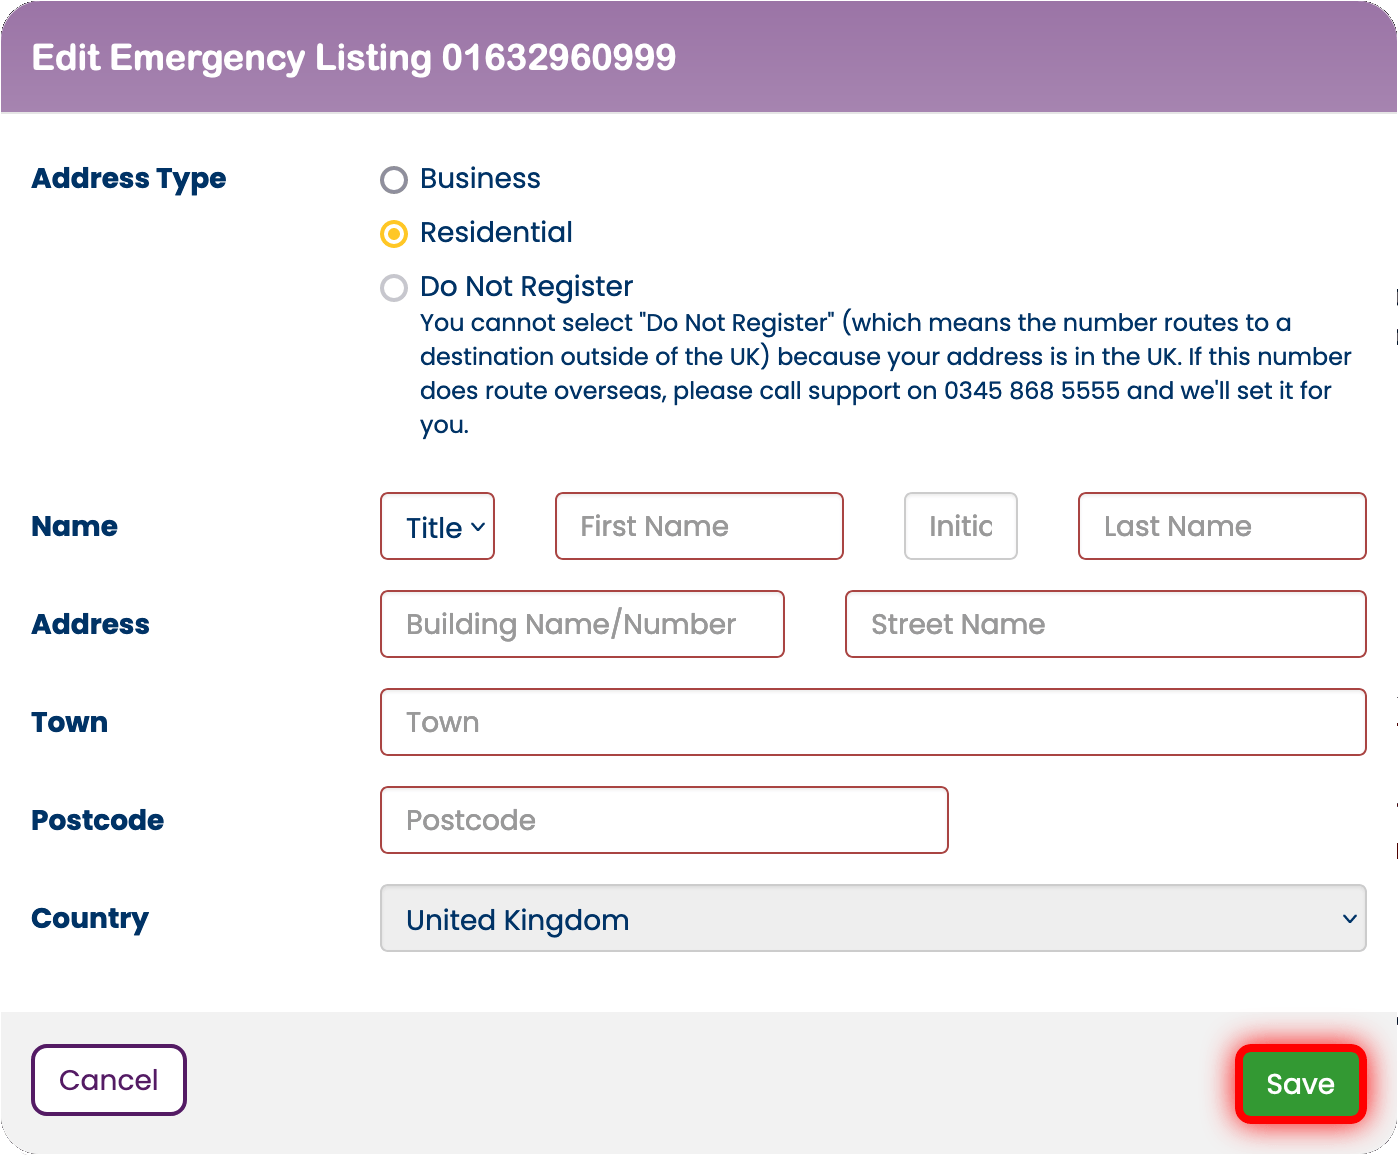 Saving your updated emergency address